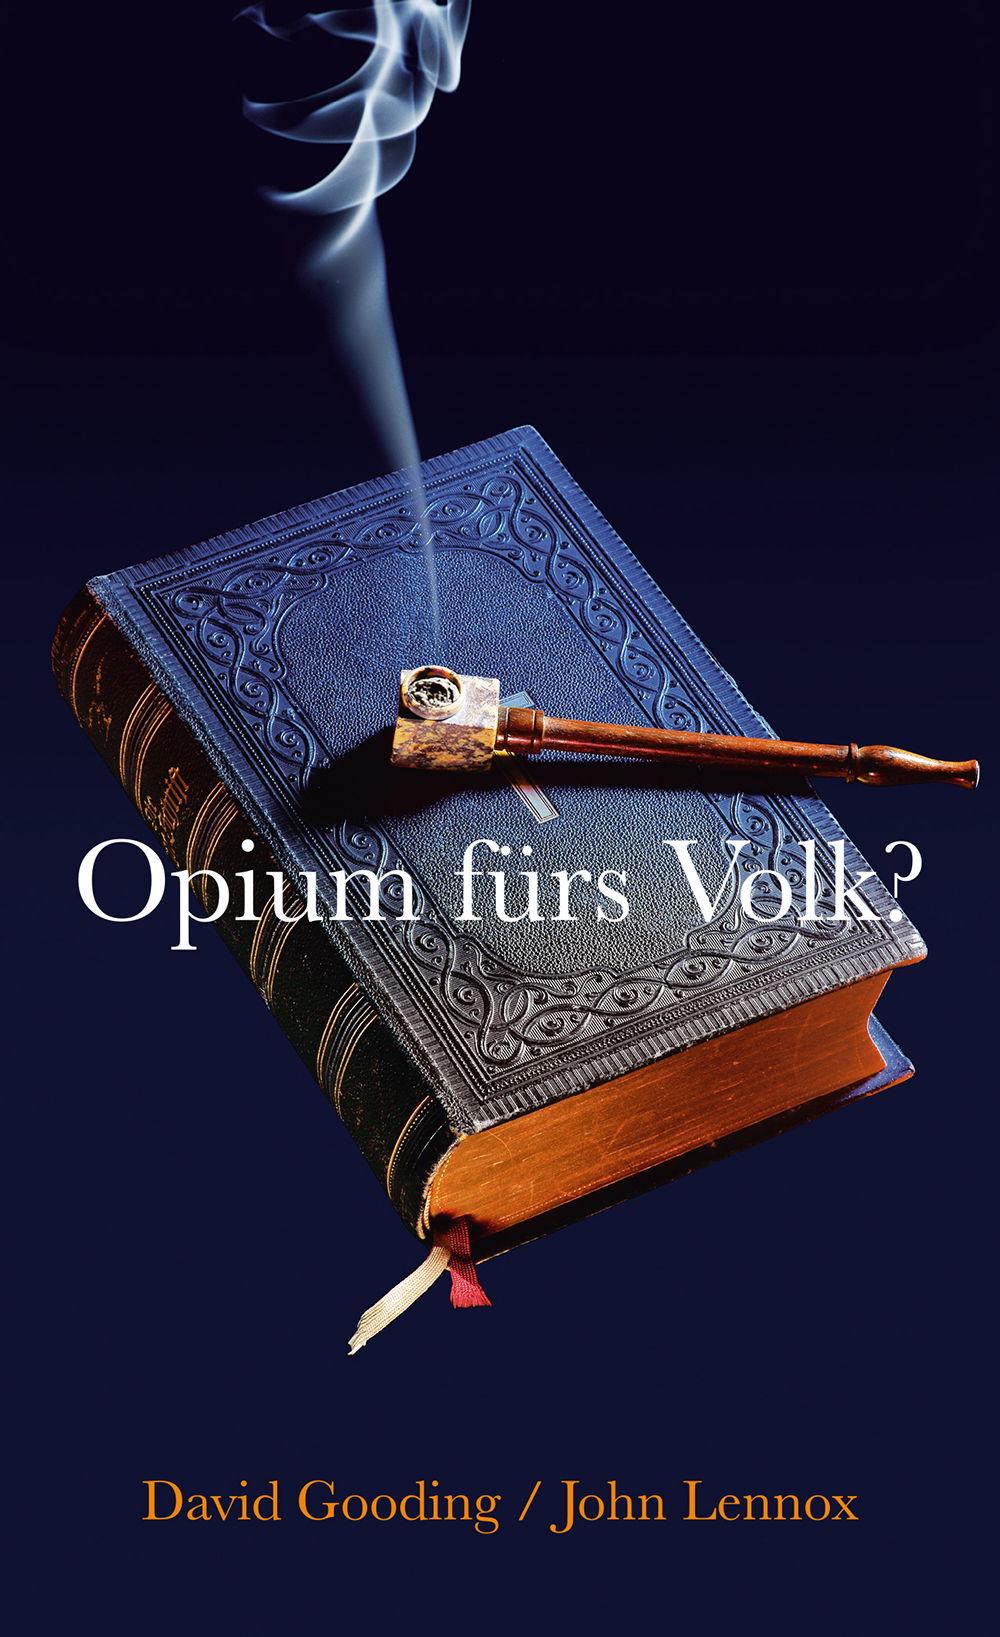 CLV_e-book-opium-fuers-volk_david-gooding-john-lennox_256807_1